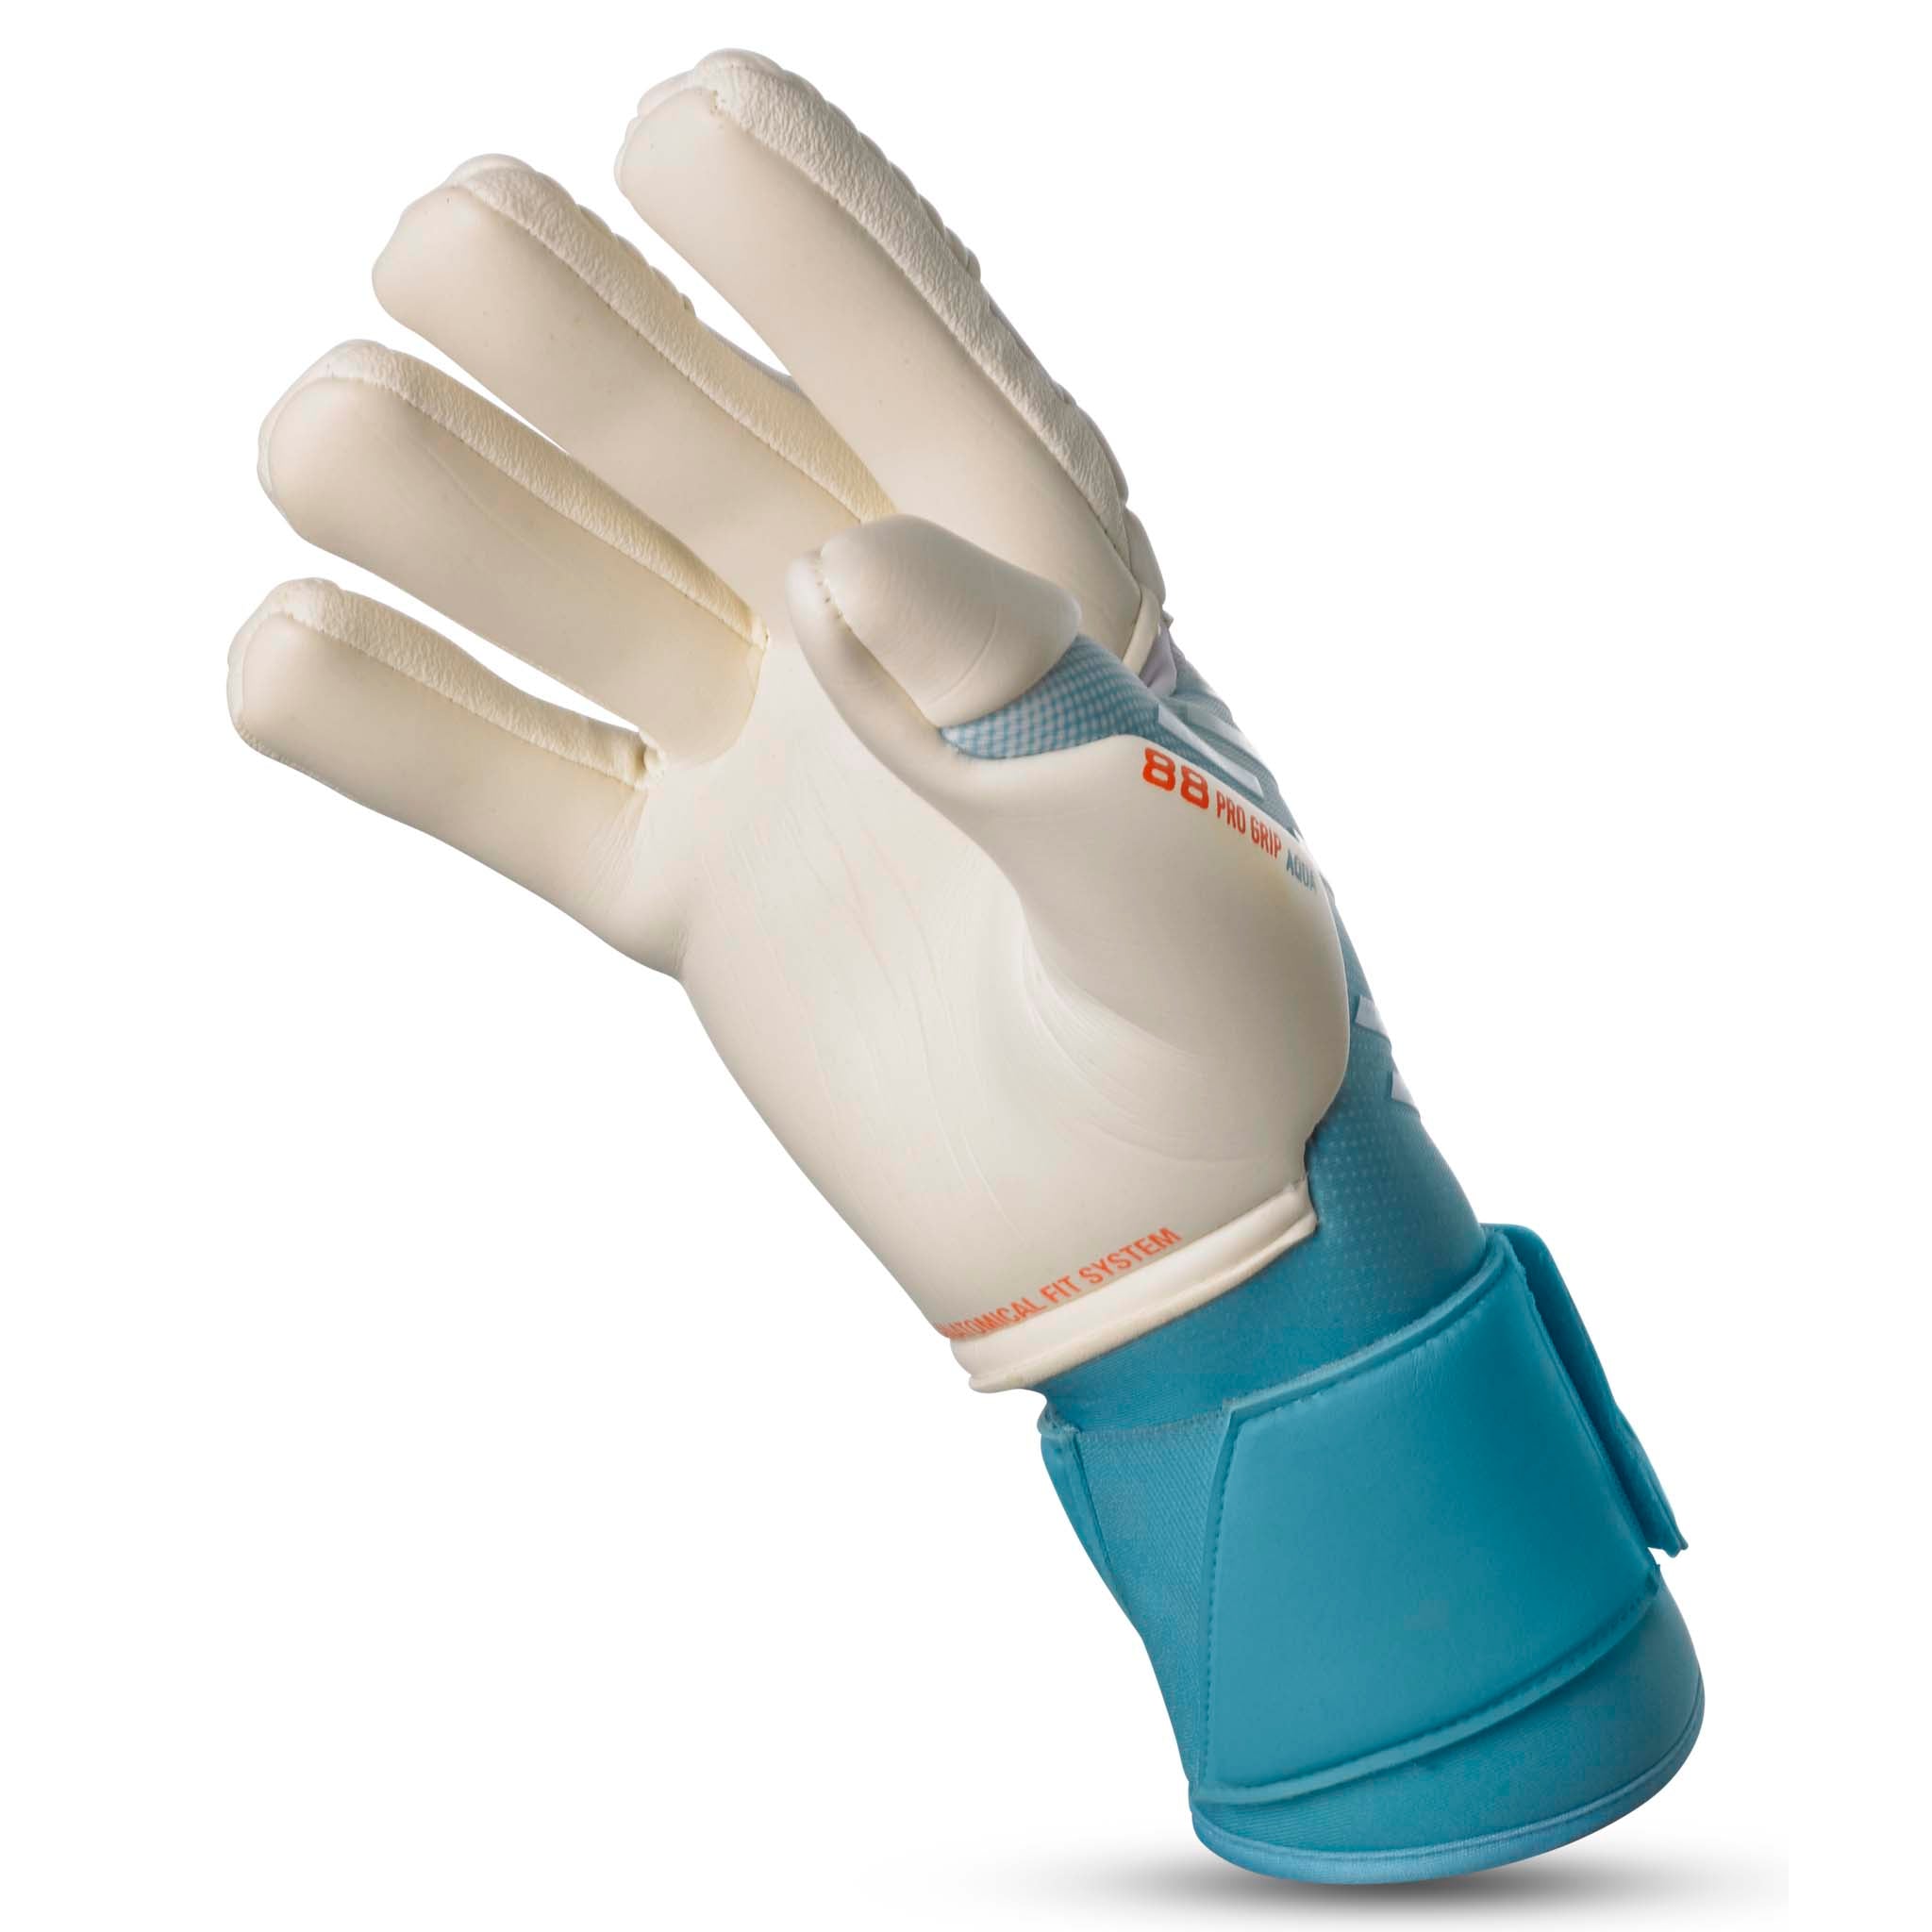 Goalkeeper gloves - 88 Pro Grip Aqua